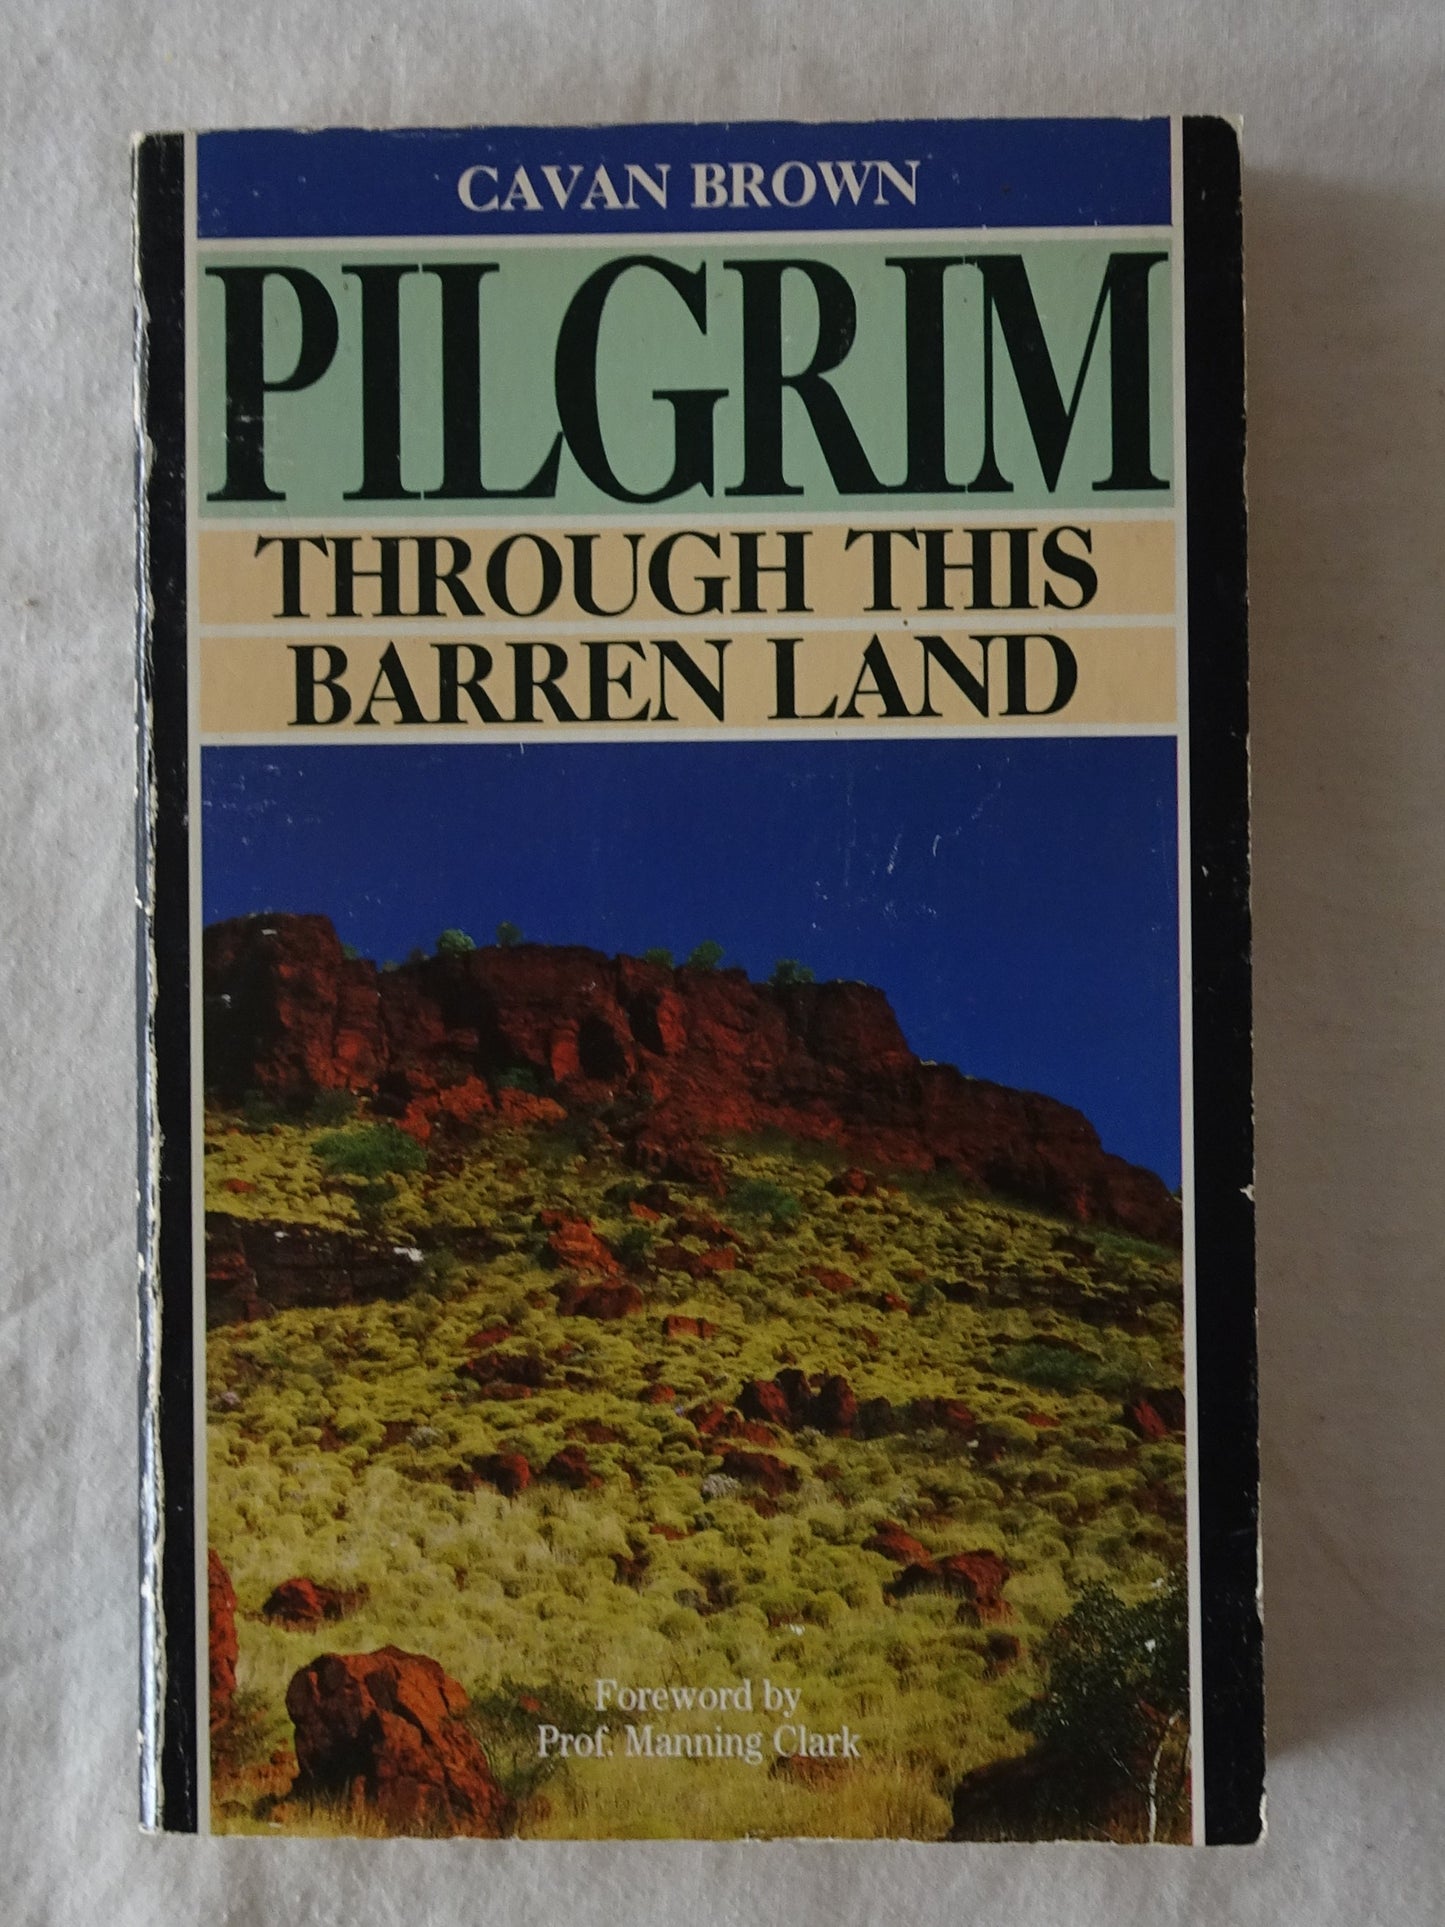 Pilgrim Through This Barren Land by Cavan Brown